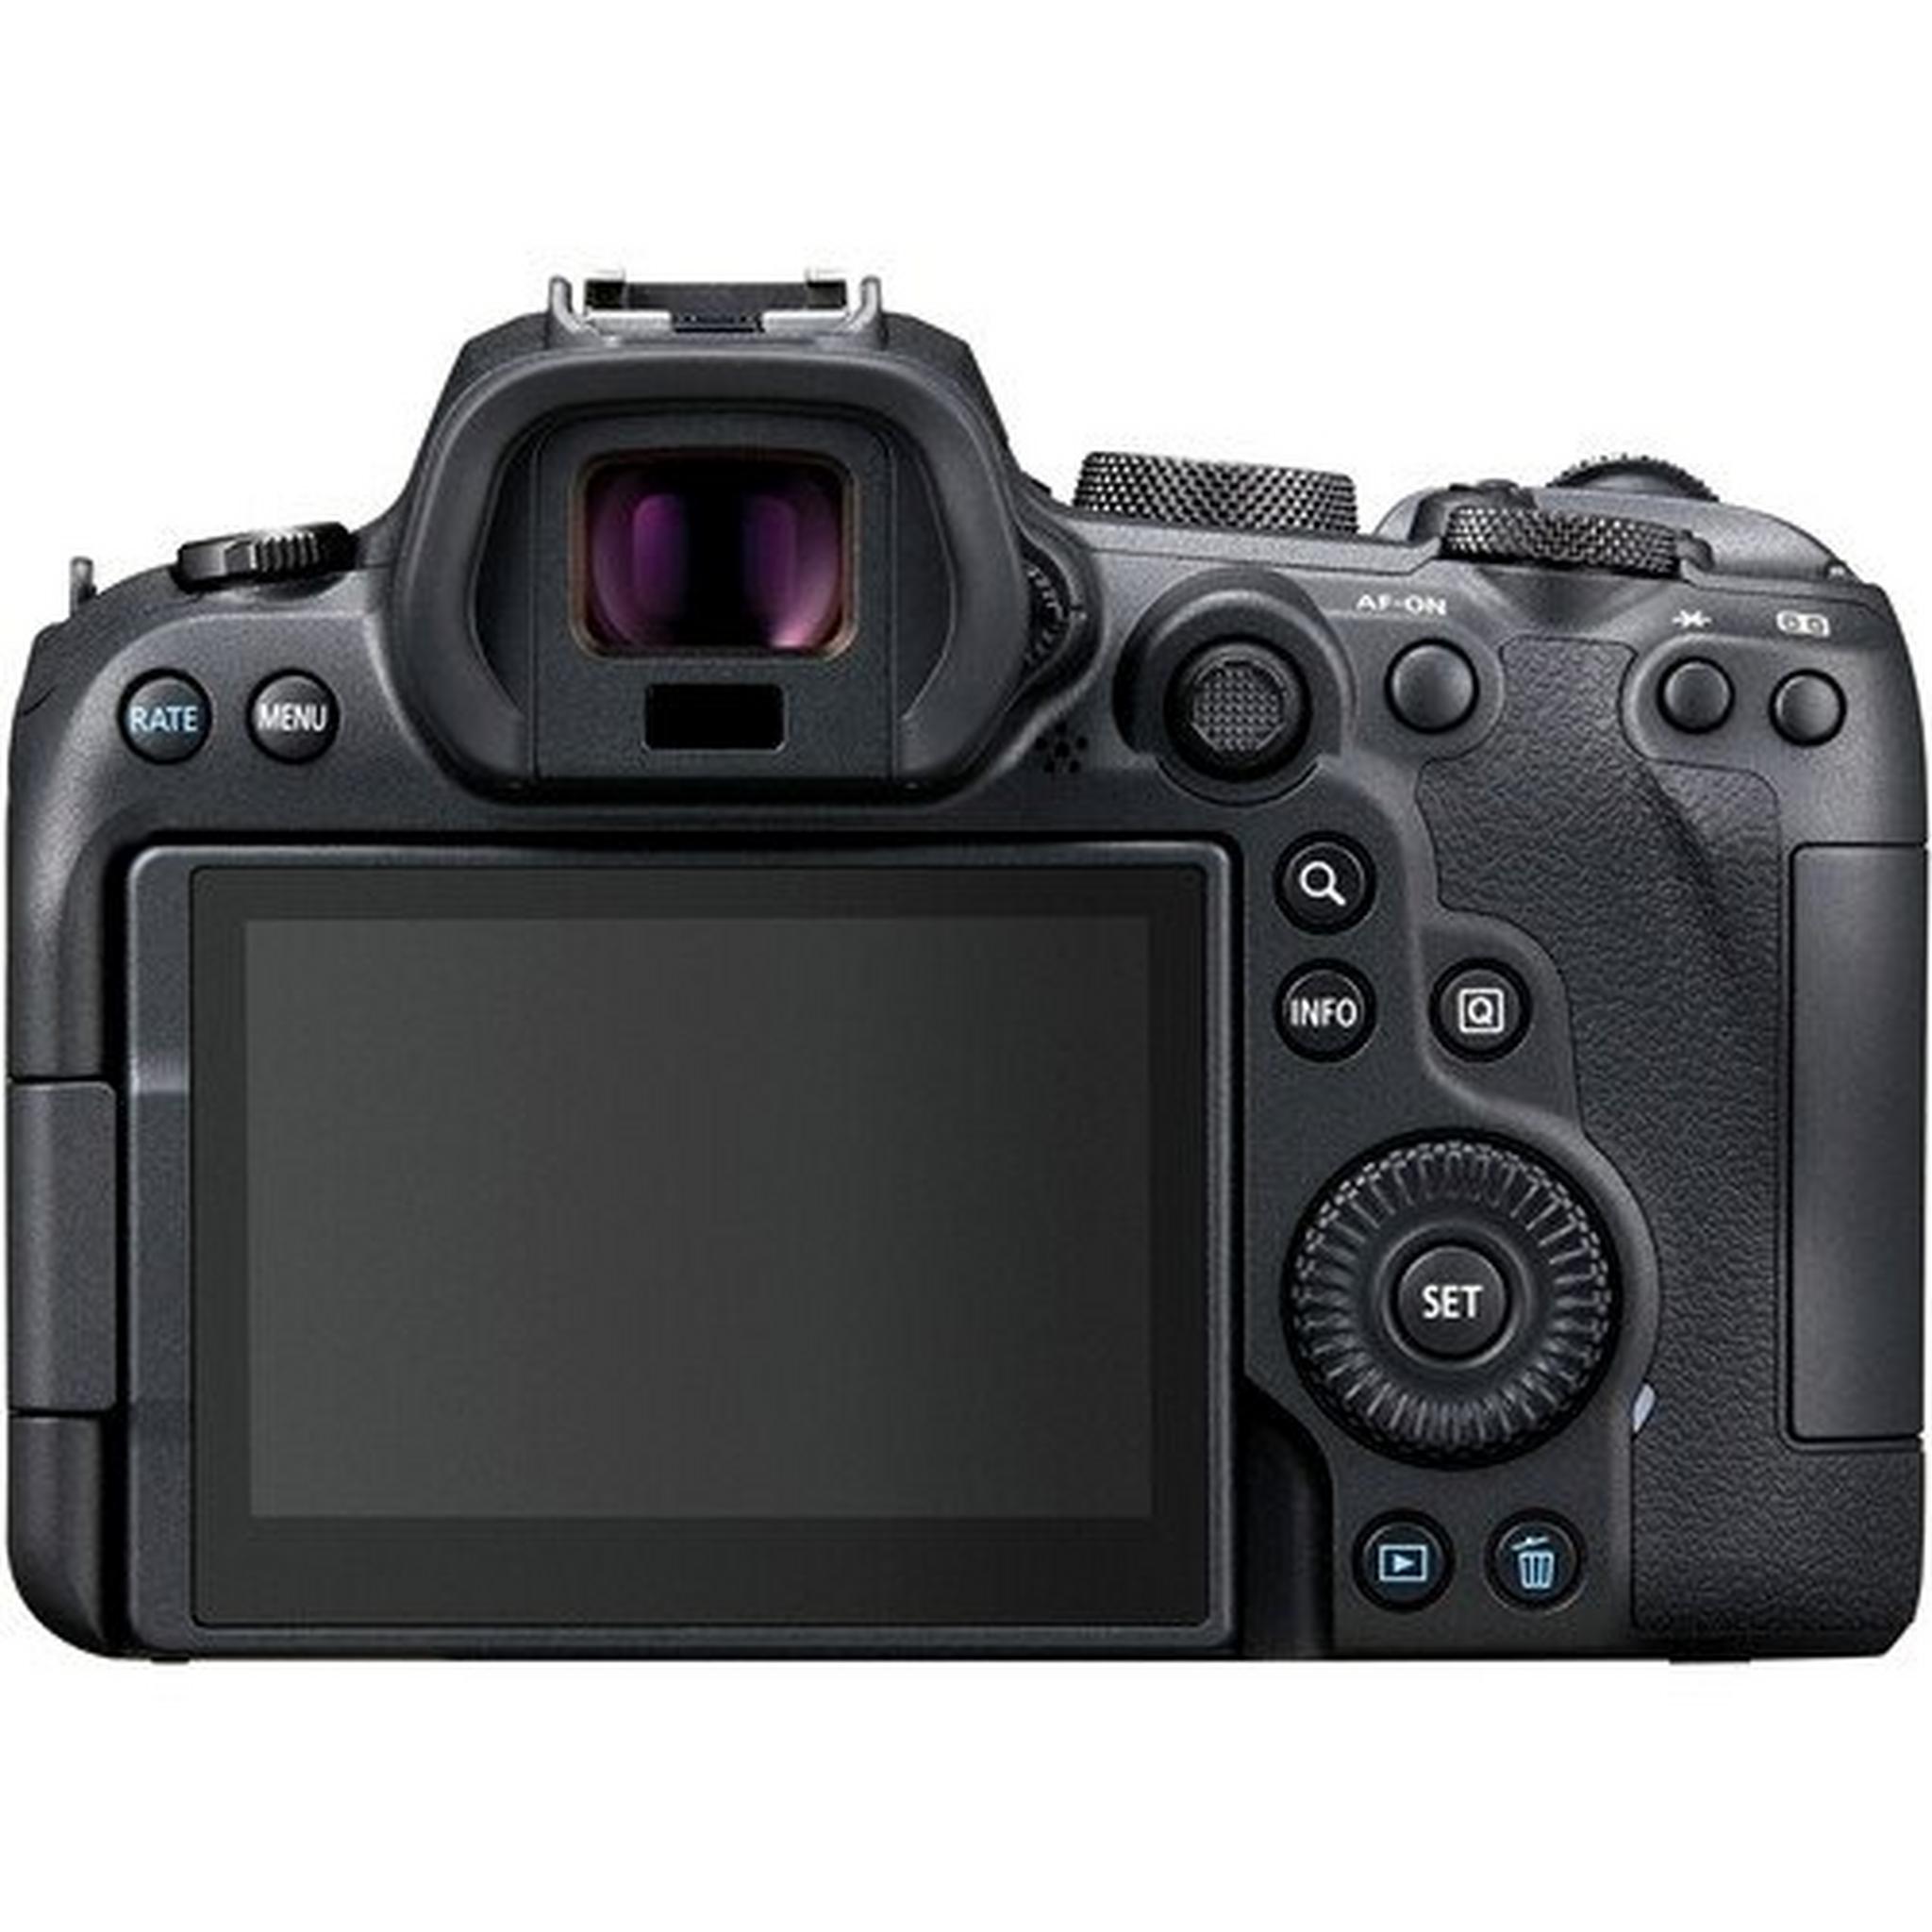 Canon EOS R6 Mirrorless Camera + 24-105MM Lens